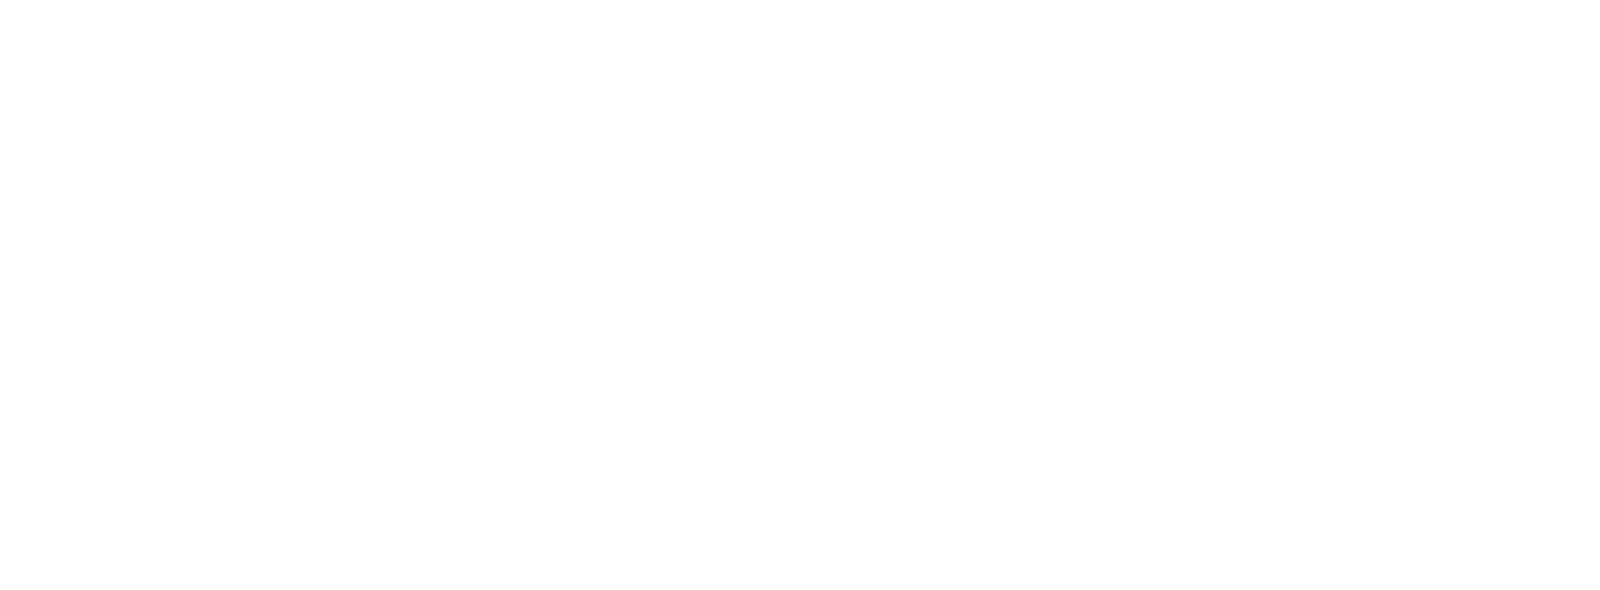 Leeds Sixth Form College